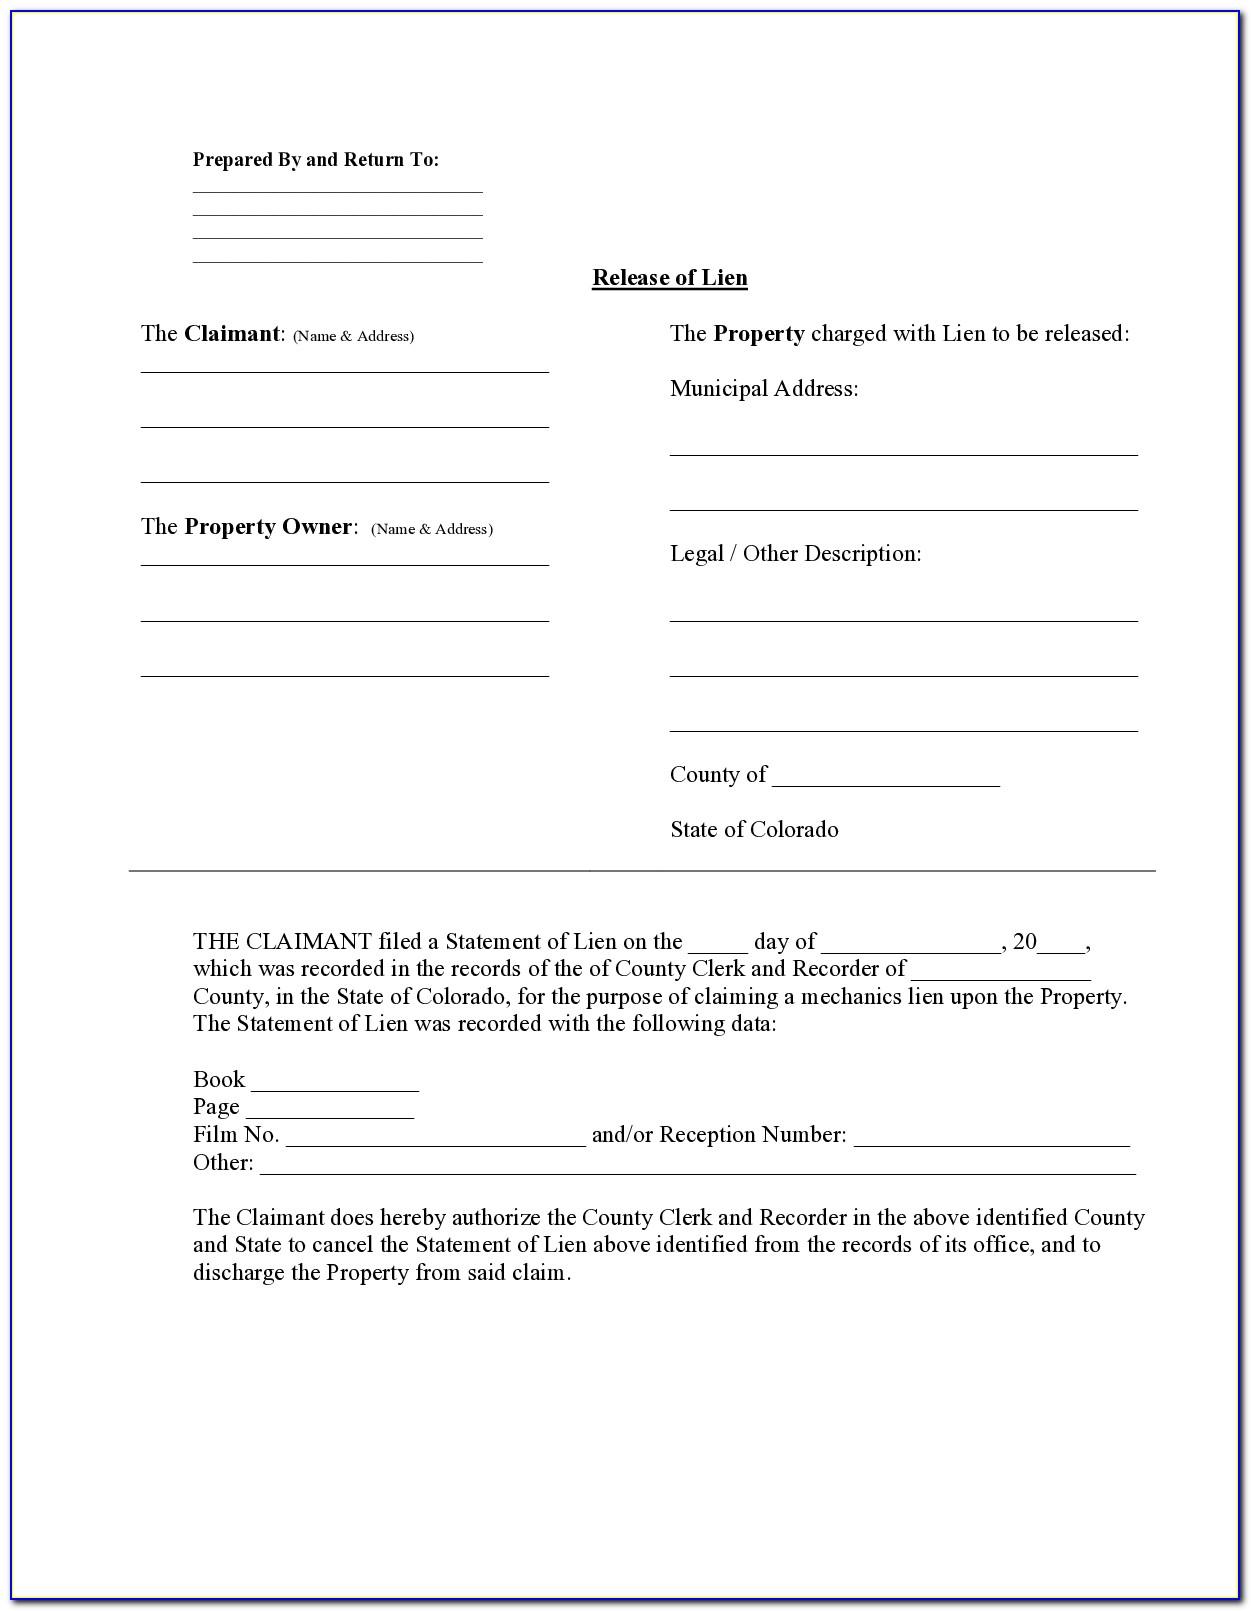 tennessee-mechanics-lien-form-pdf